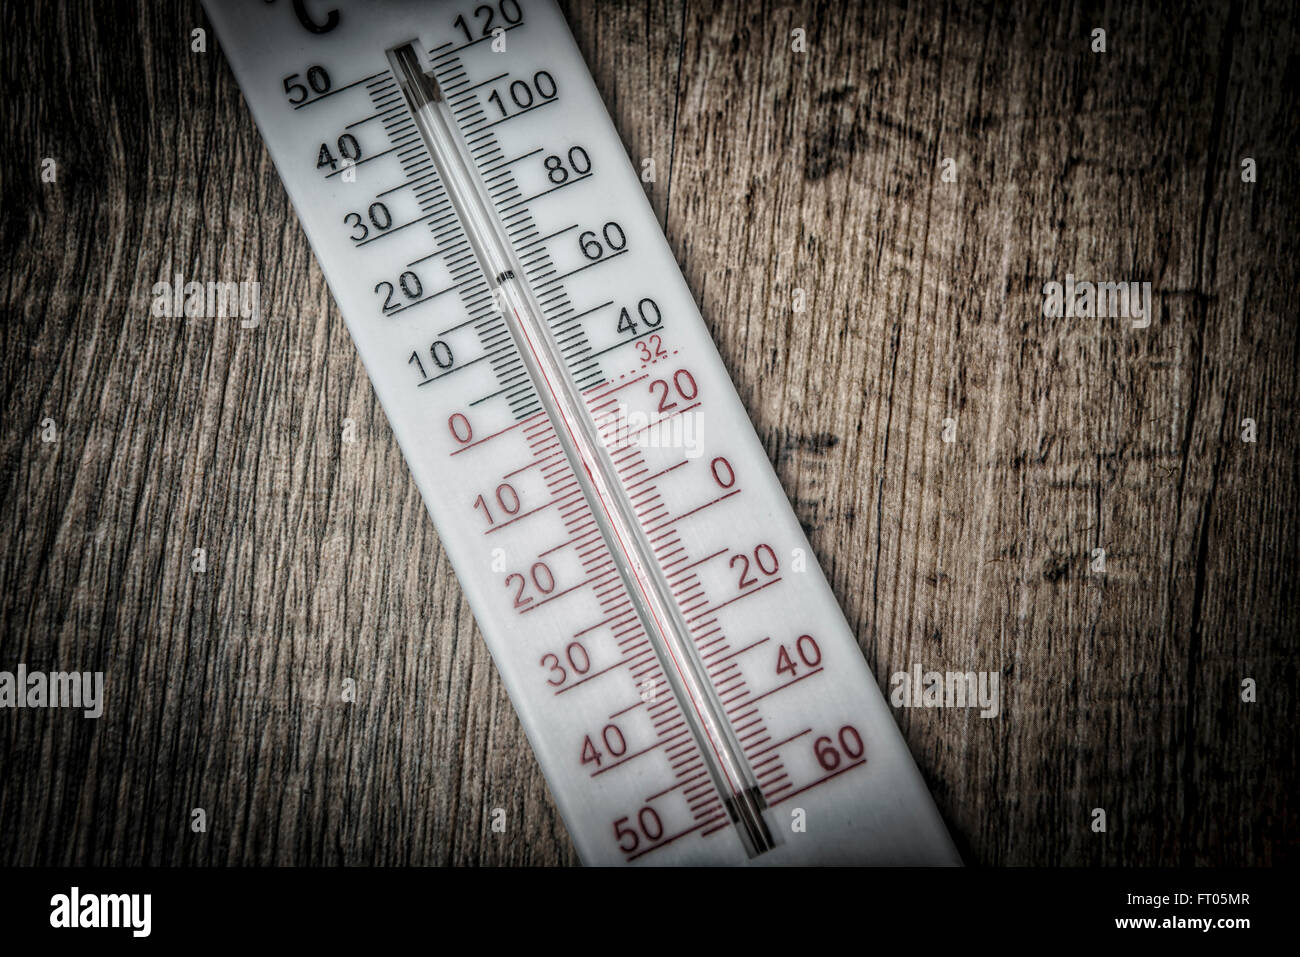 https://c8.alamy.com/comp/FT05MR/thermometer-measuring-room-temperature-FT05MR.jpg